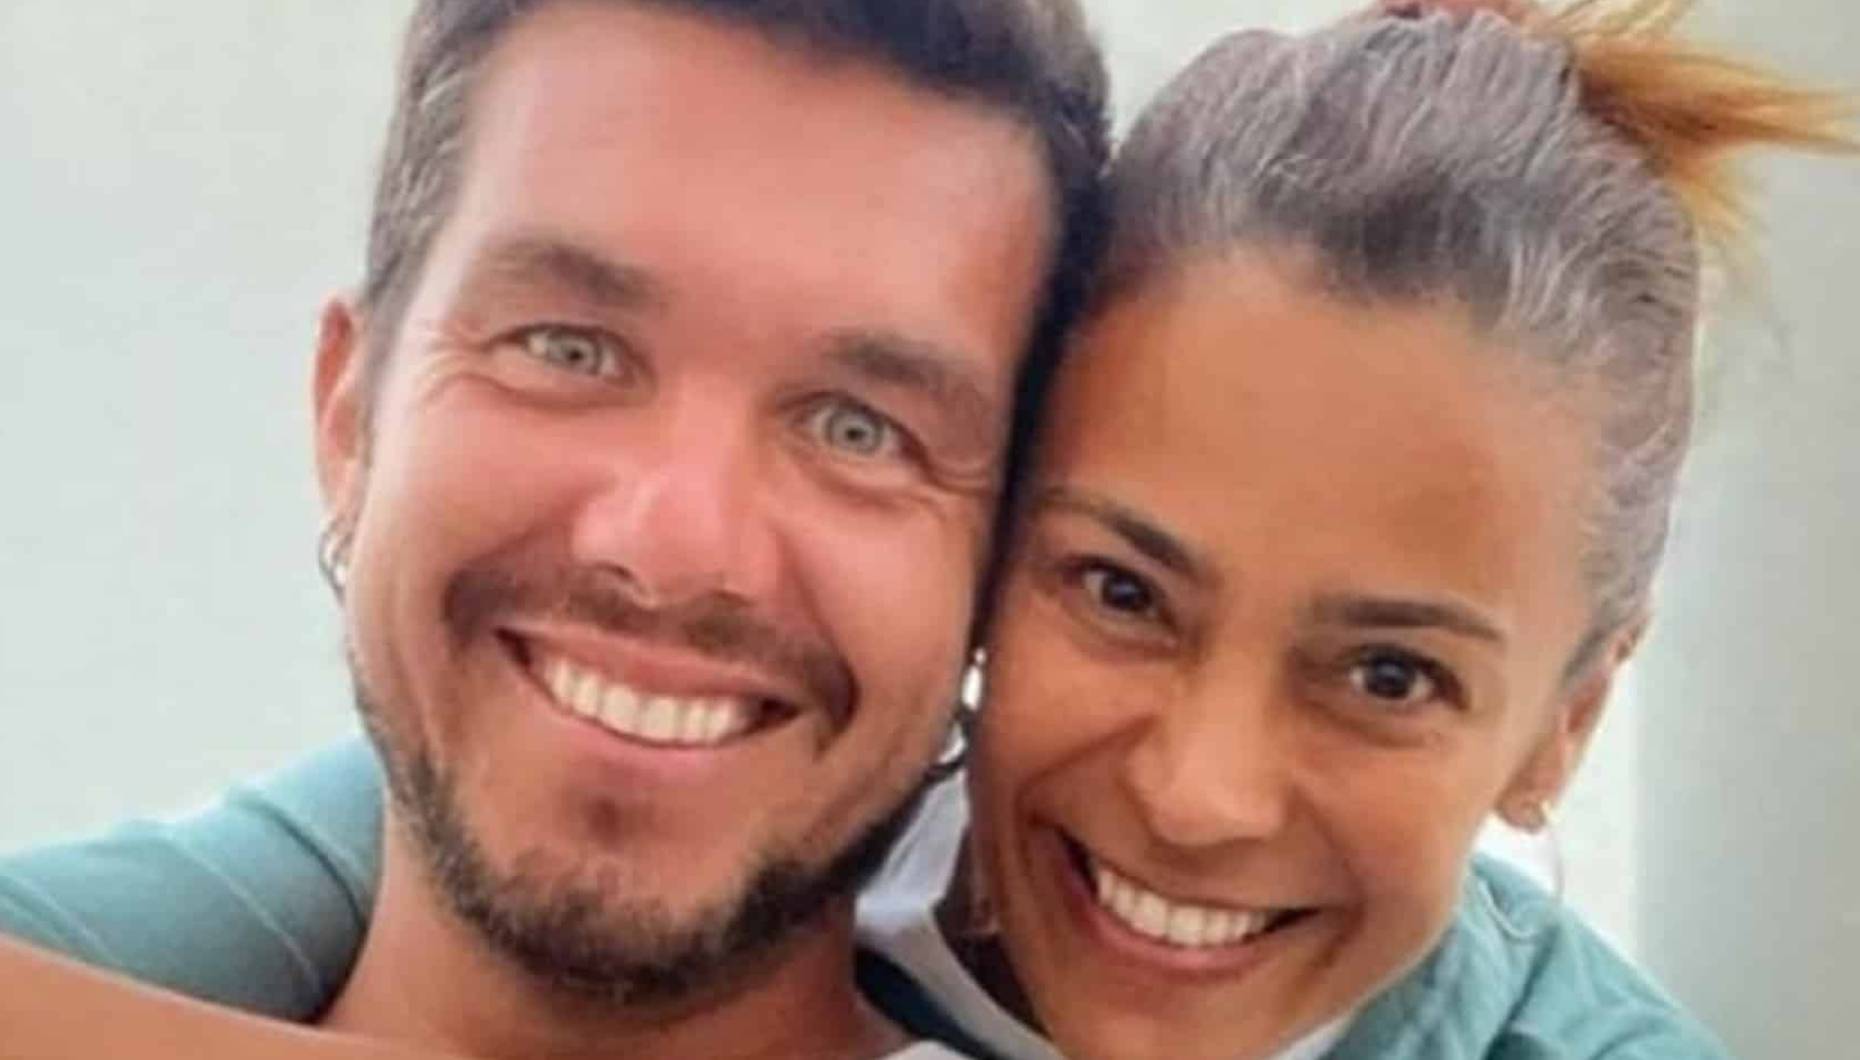 Rita Ferro Rodrigues e Rúben Vieira separados. Novos detalhes!